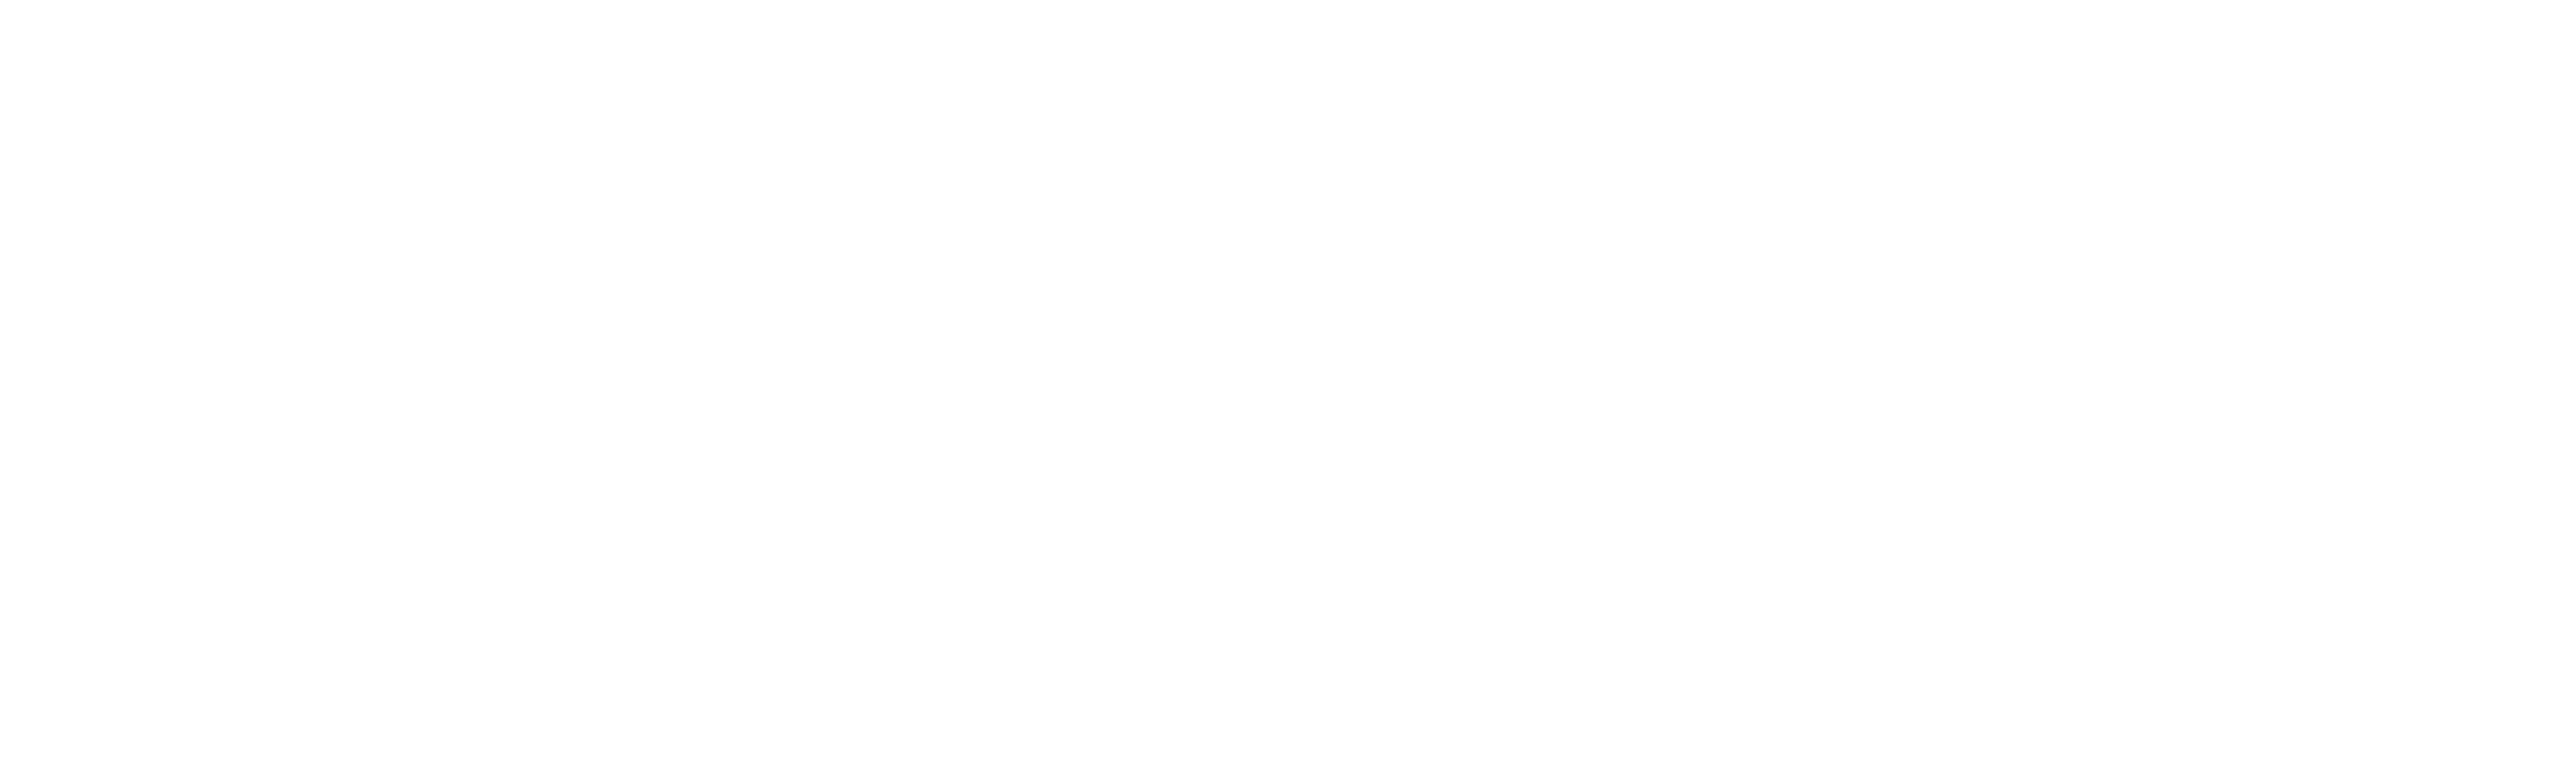 South Carolina State Library logo